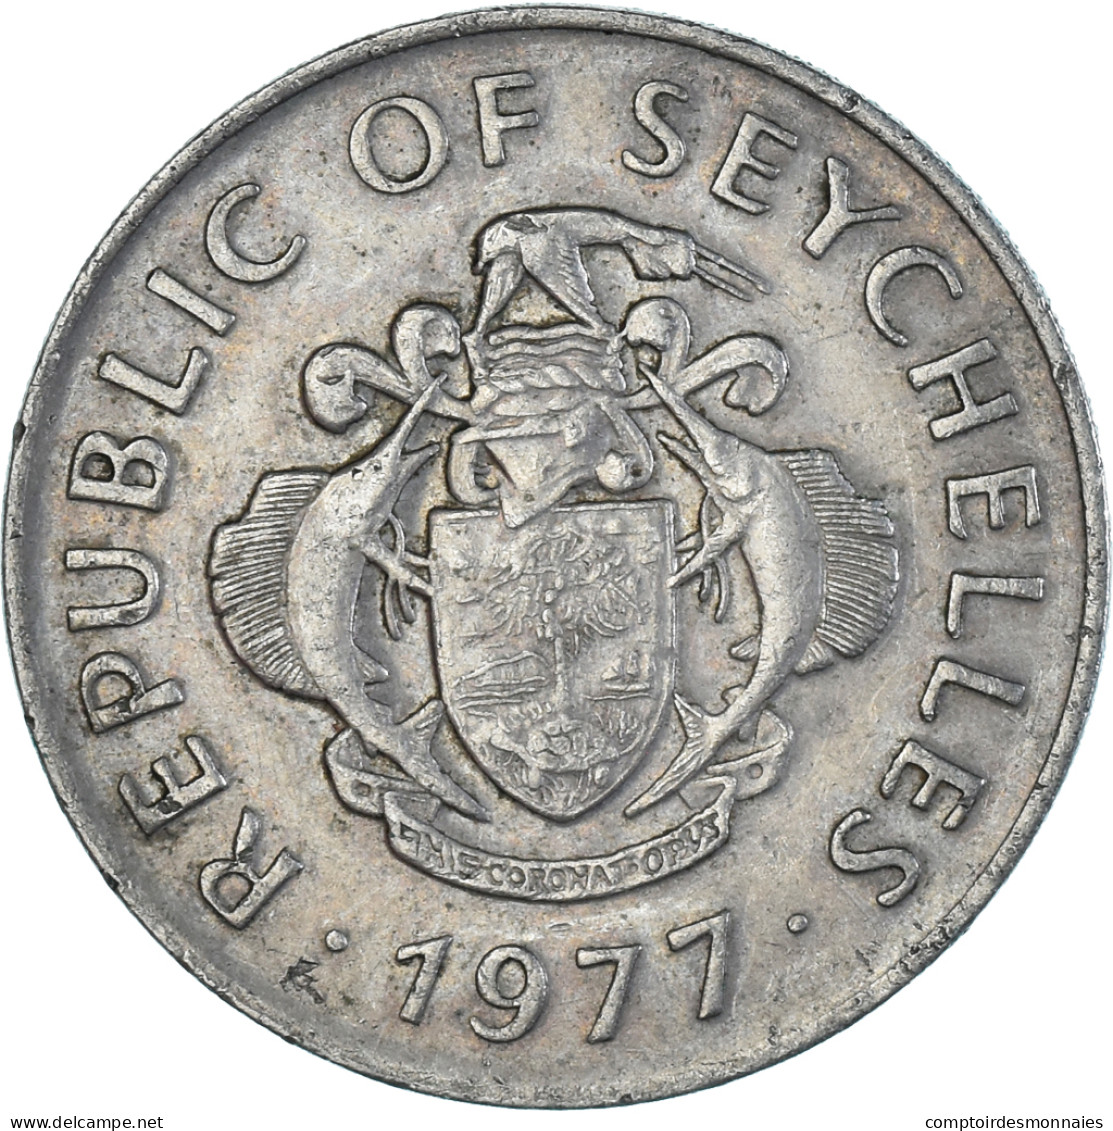 Monnaie, Seychelles, Rupee, 1977 - Seychellen